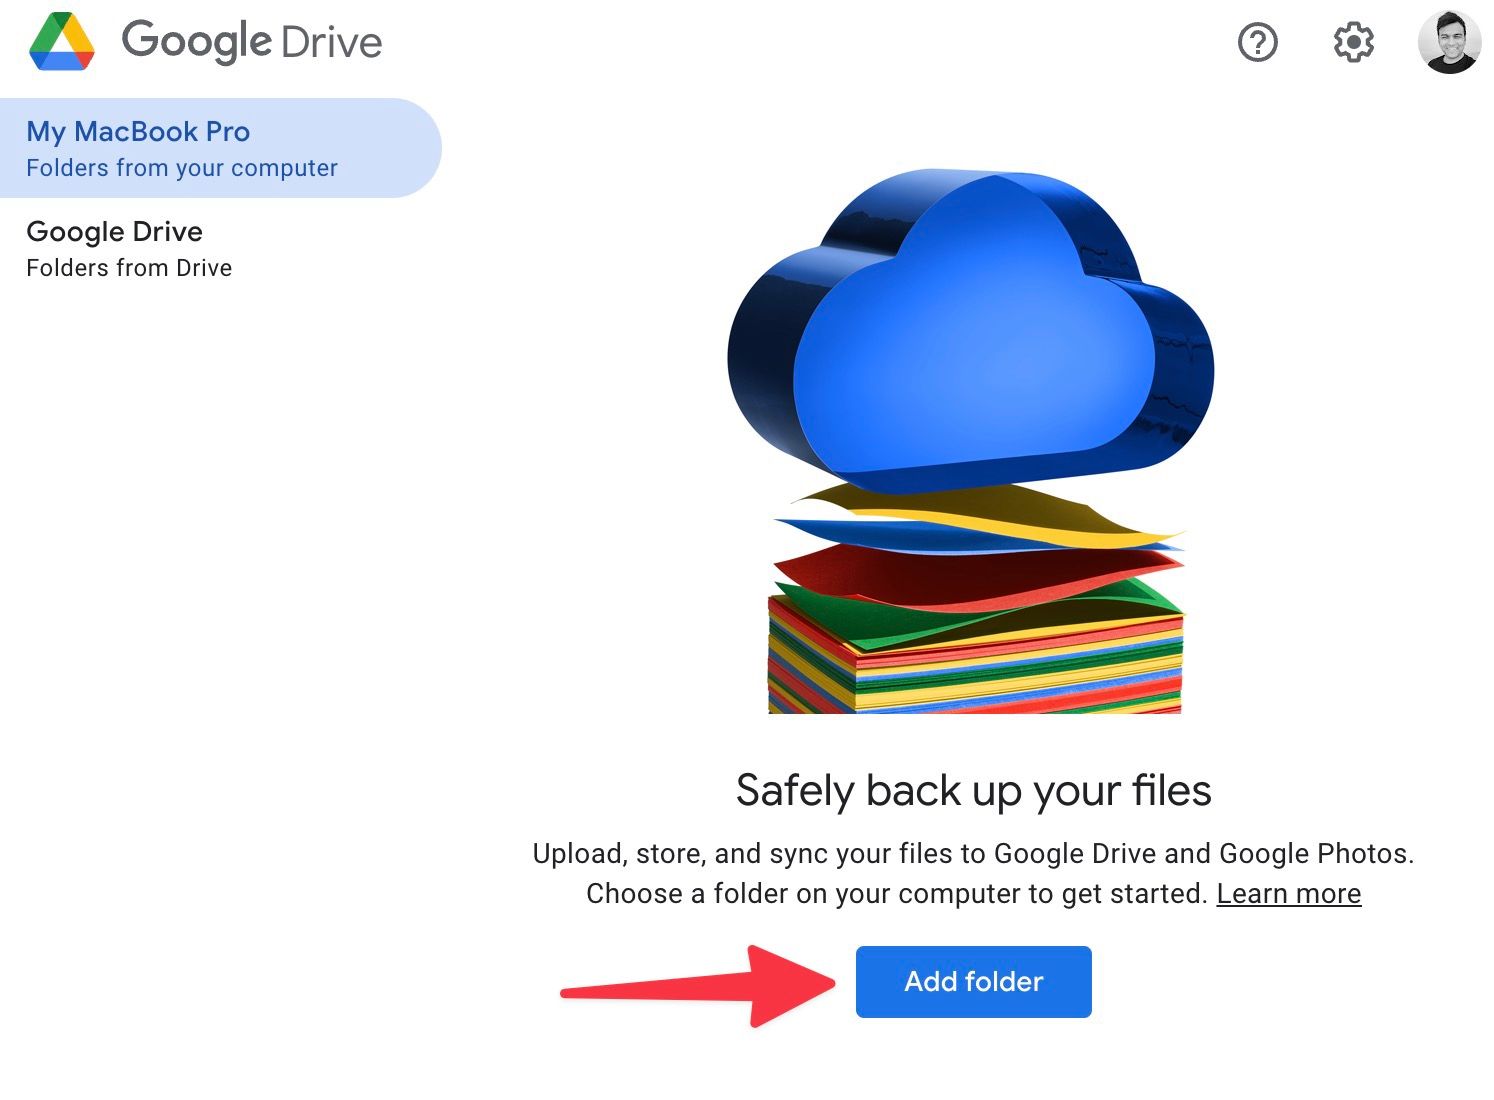 Add folder in Google Drive